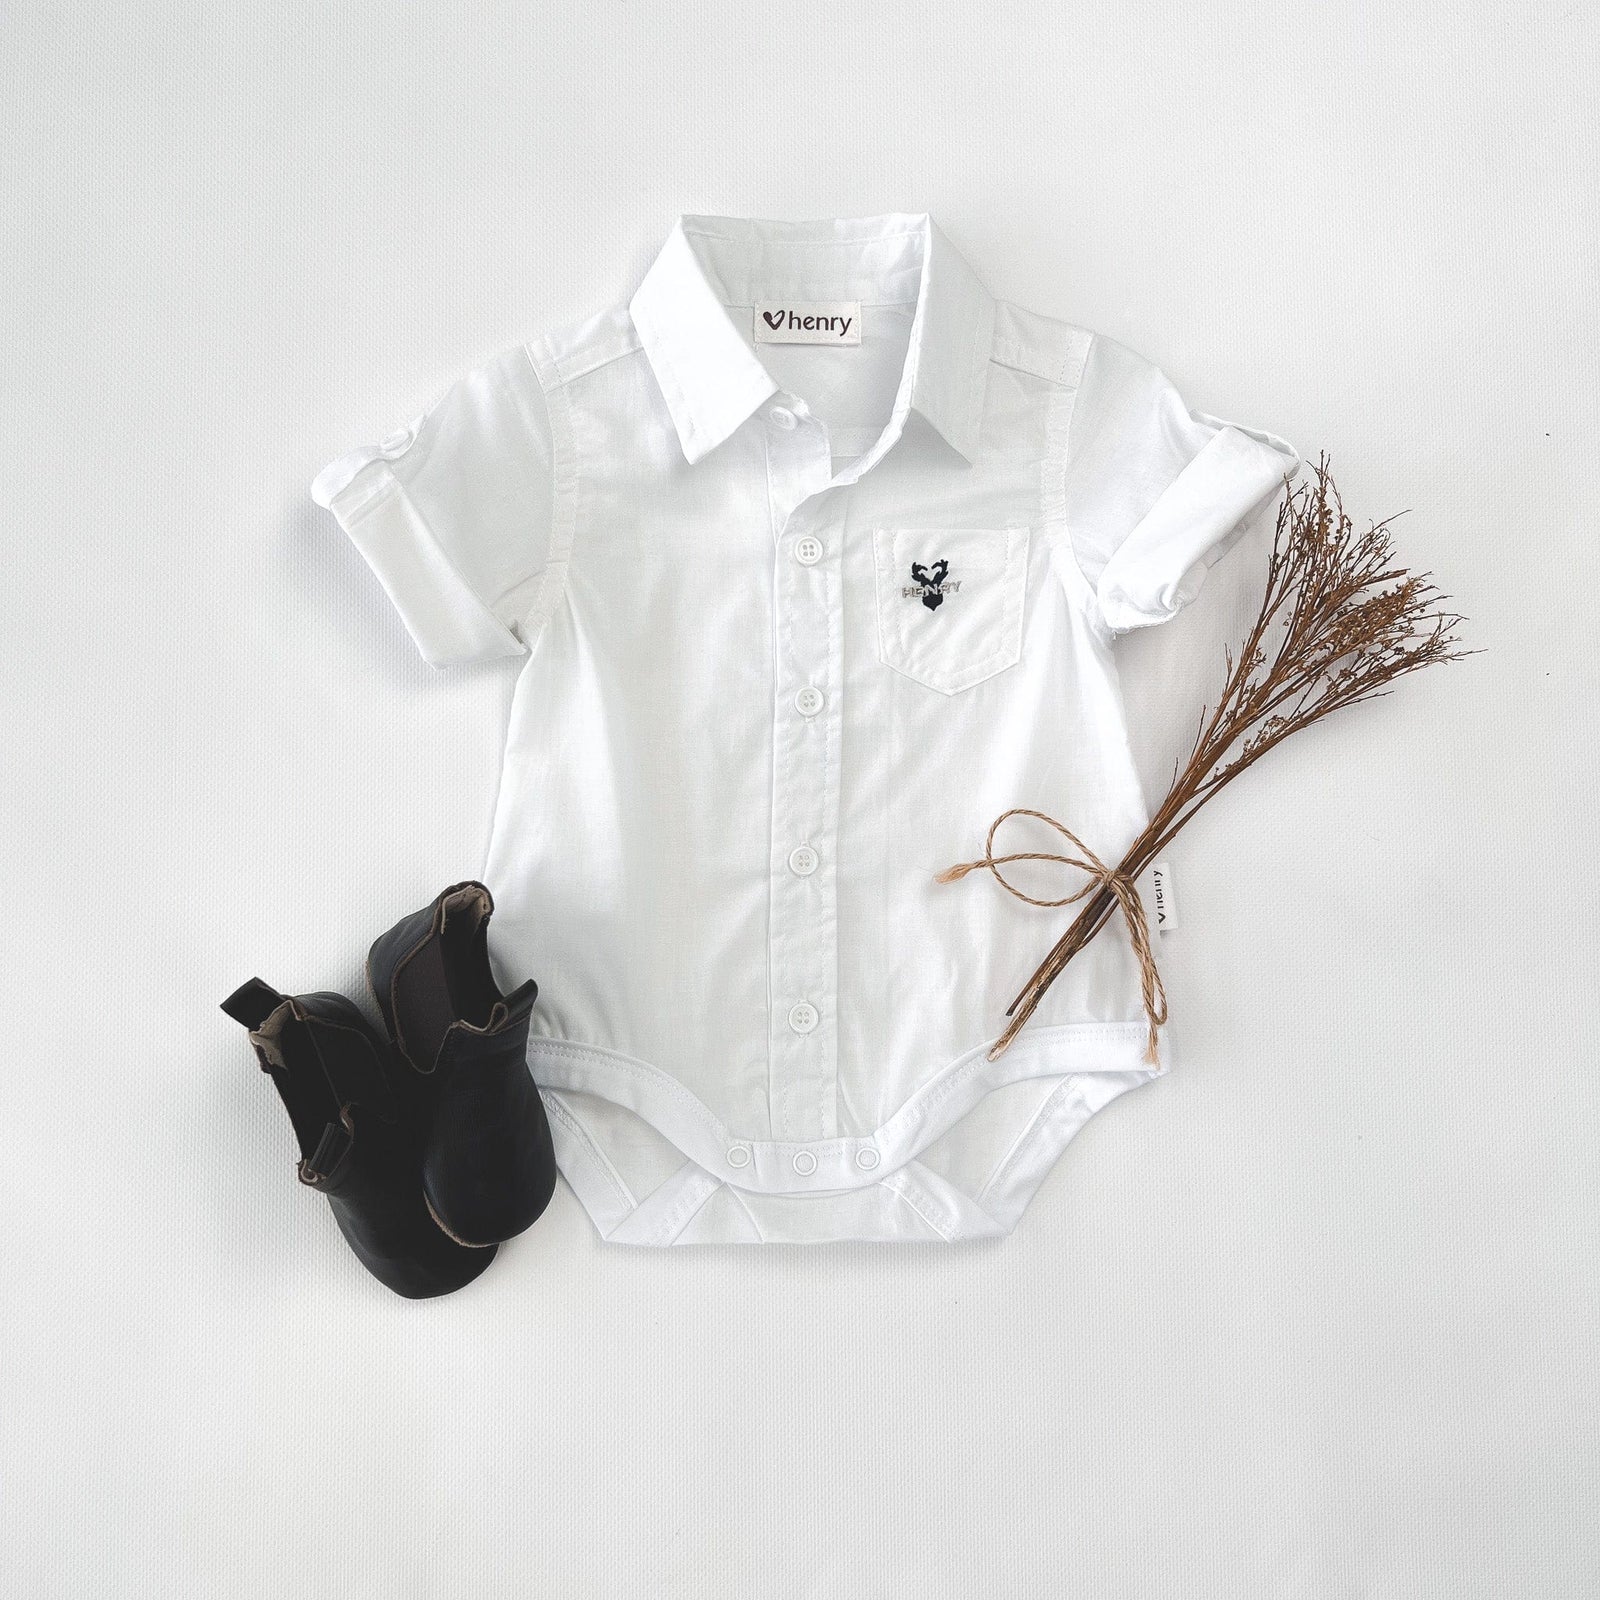 Baby Boys Dress Shirt Romper - Large Navy Check – Love Henry